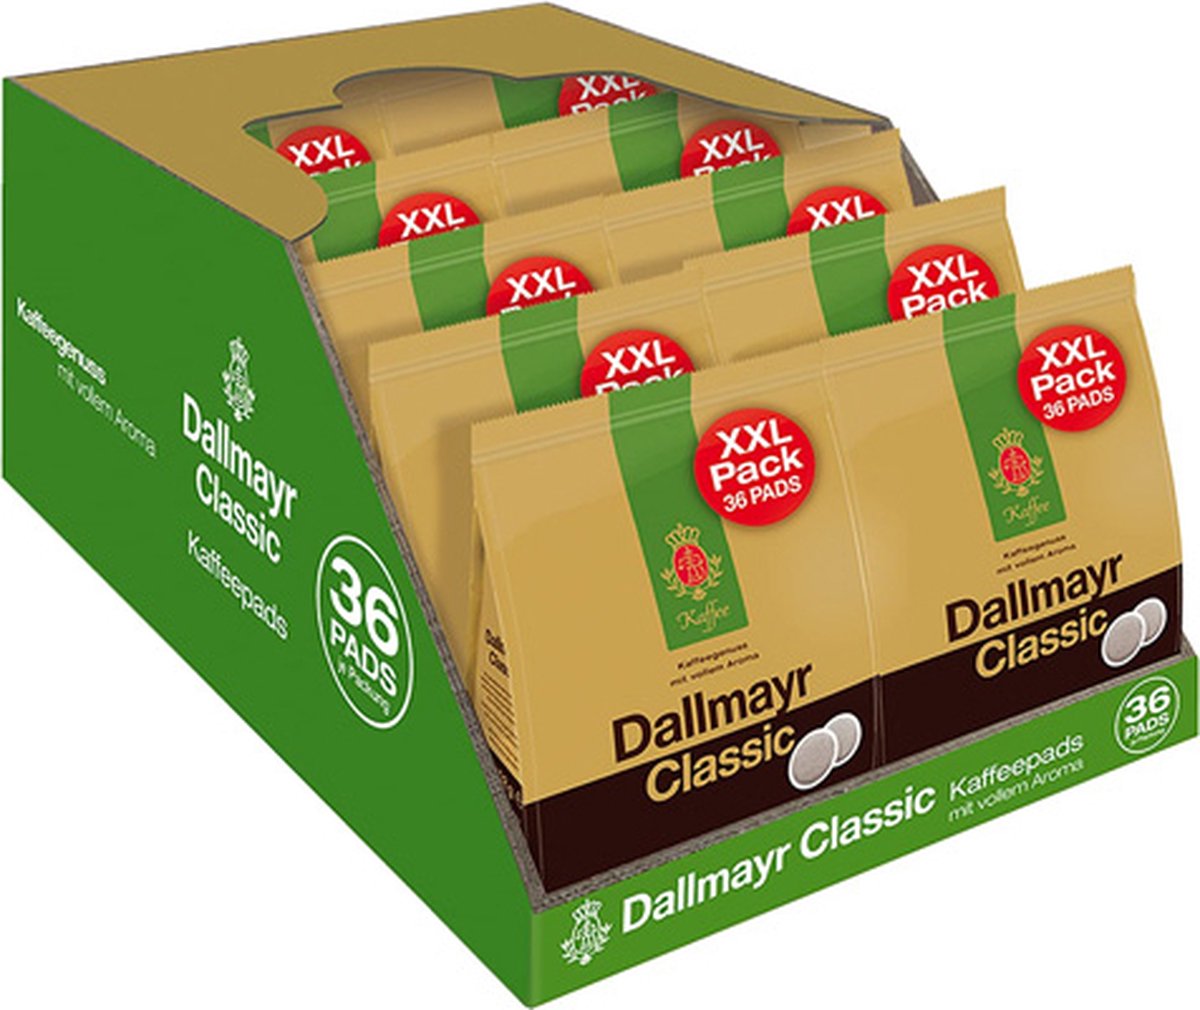 Dallmayr - Classic - 10x 36 pads